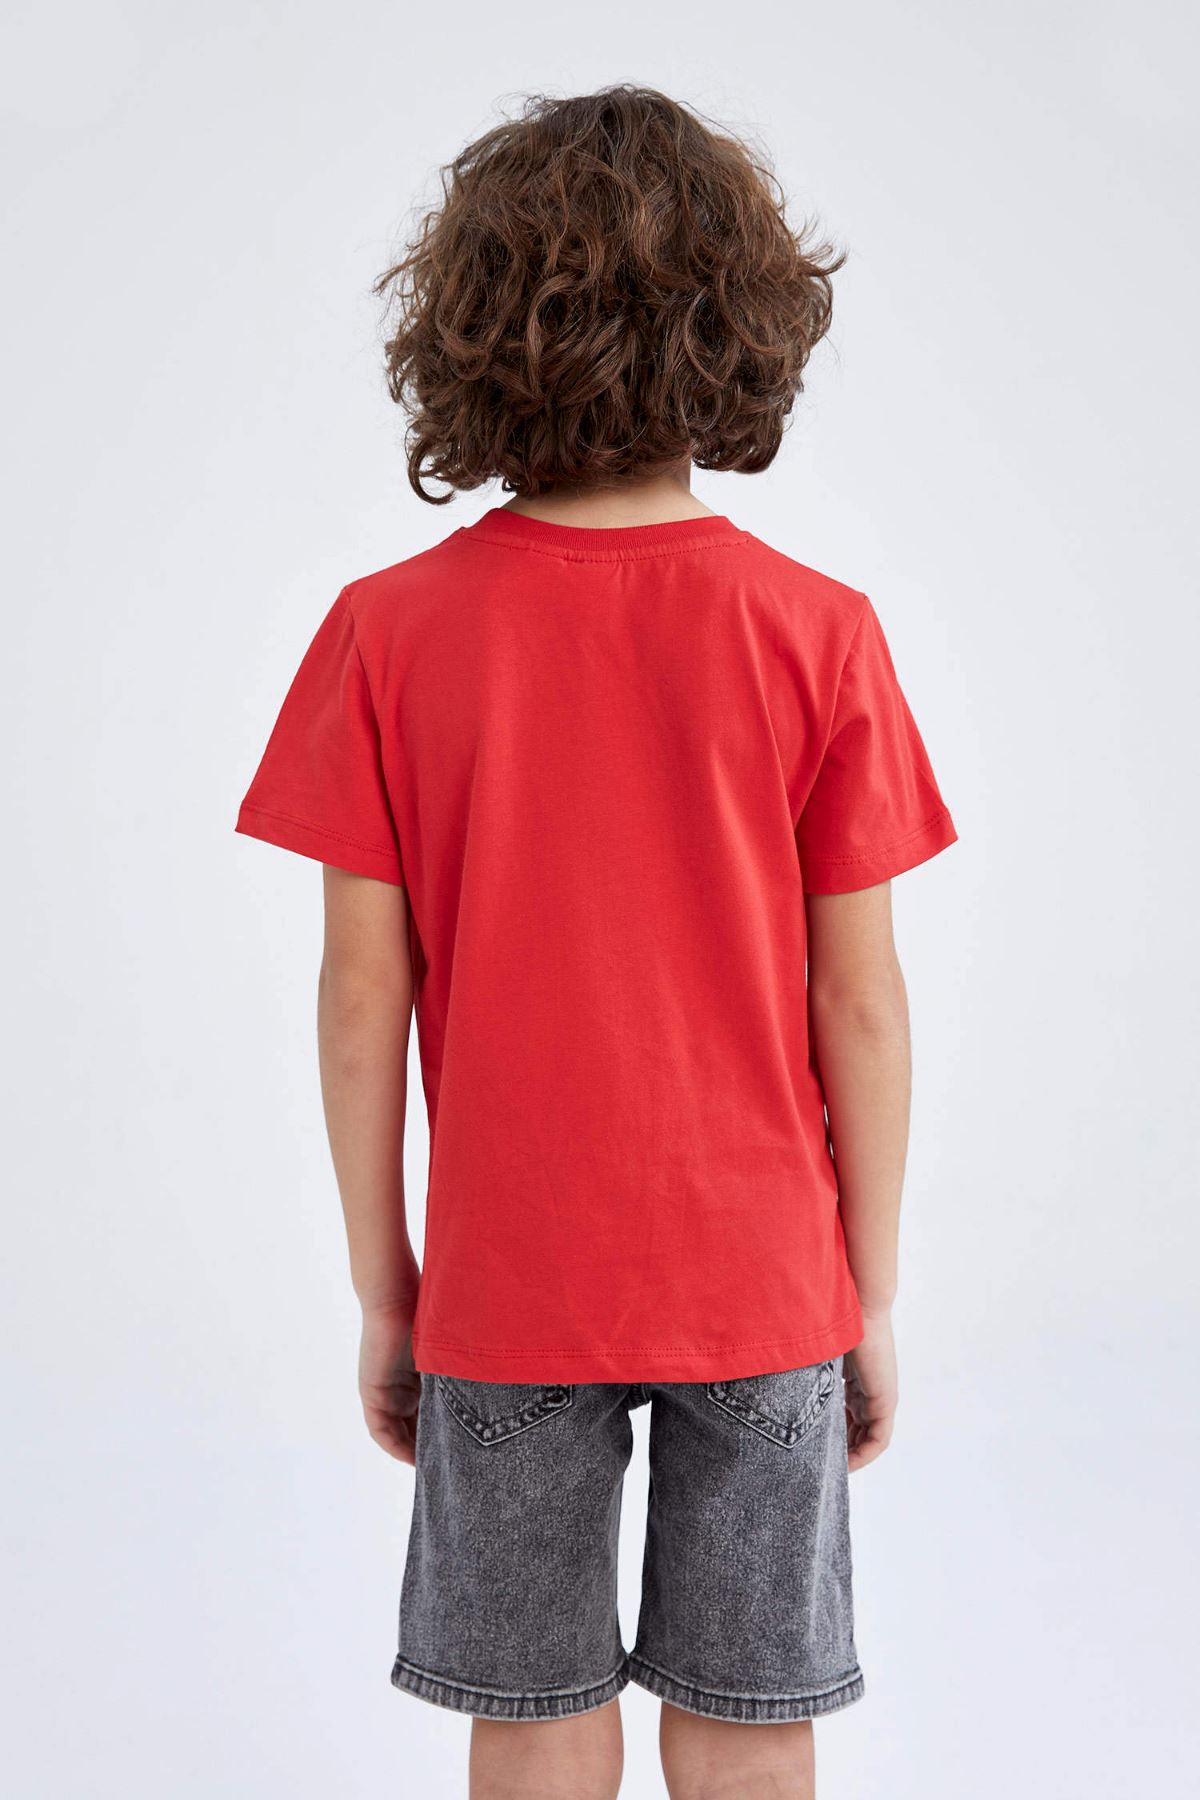 Defacto Erkek Çocuk Kırmızı Tişört - Z2150A6/RD256